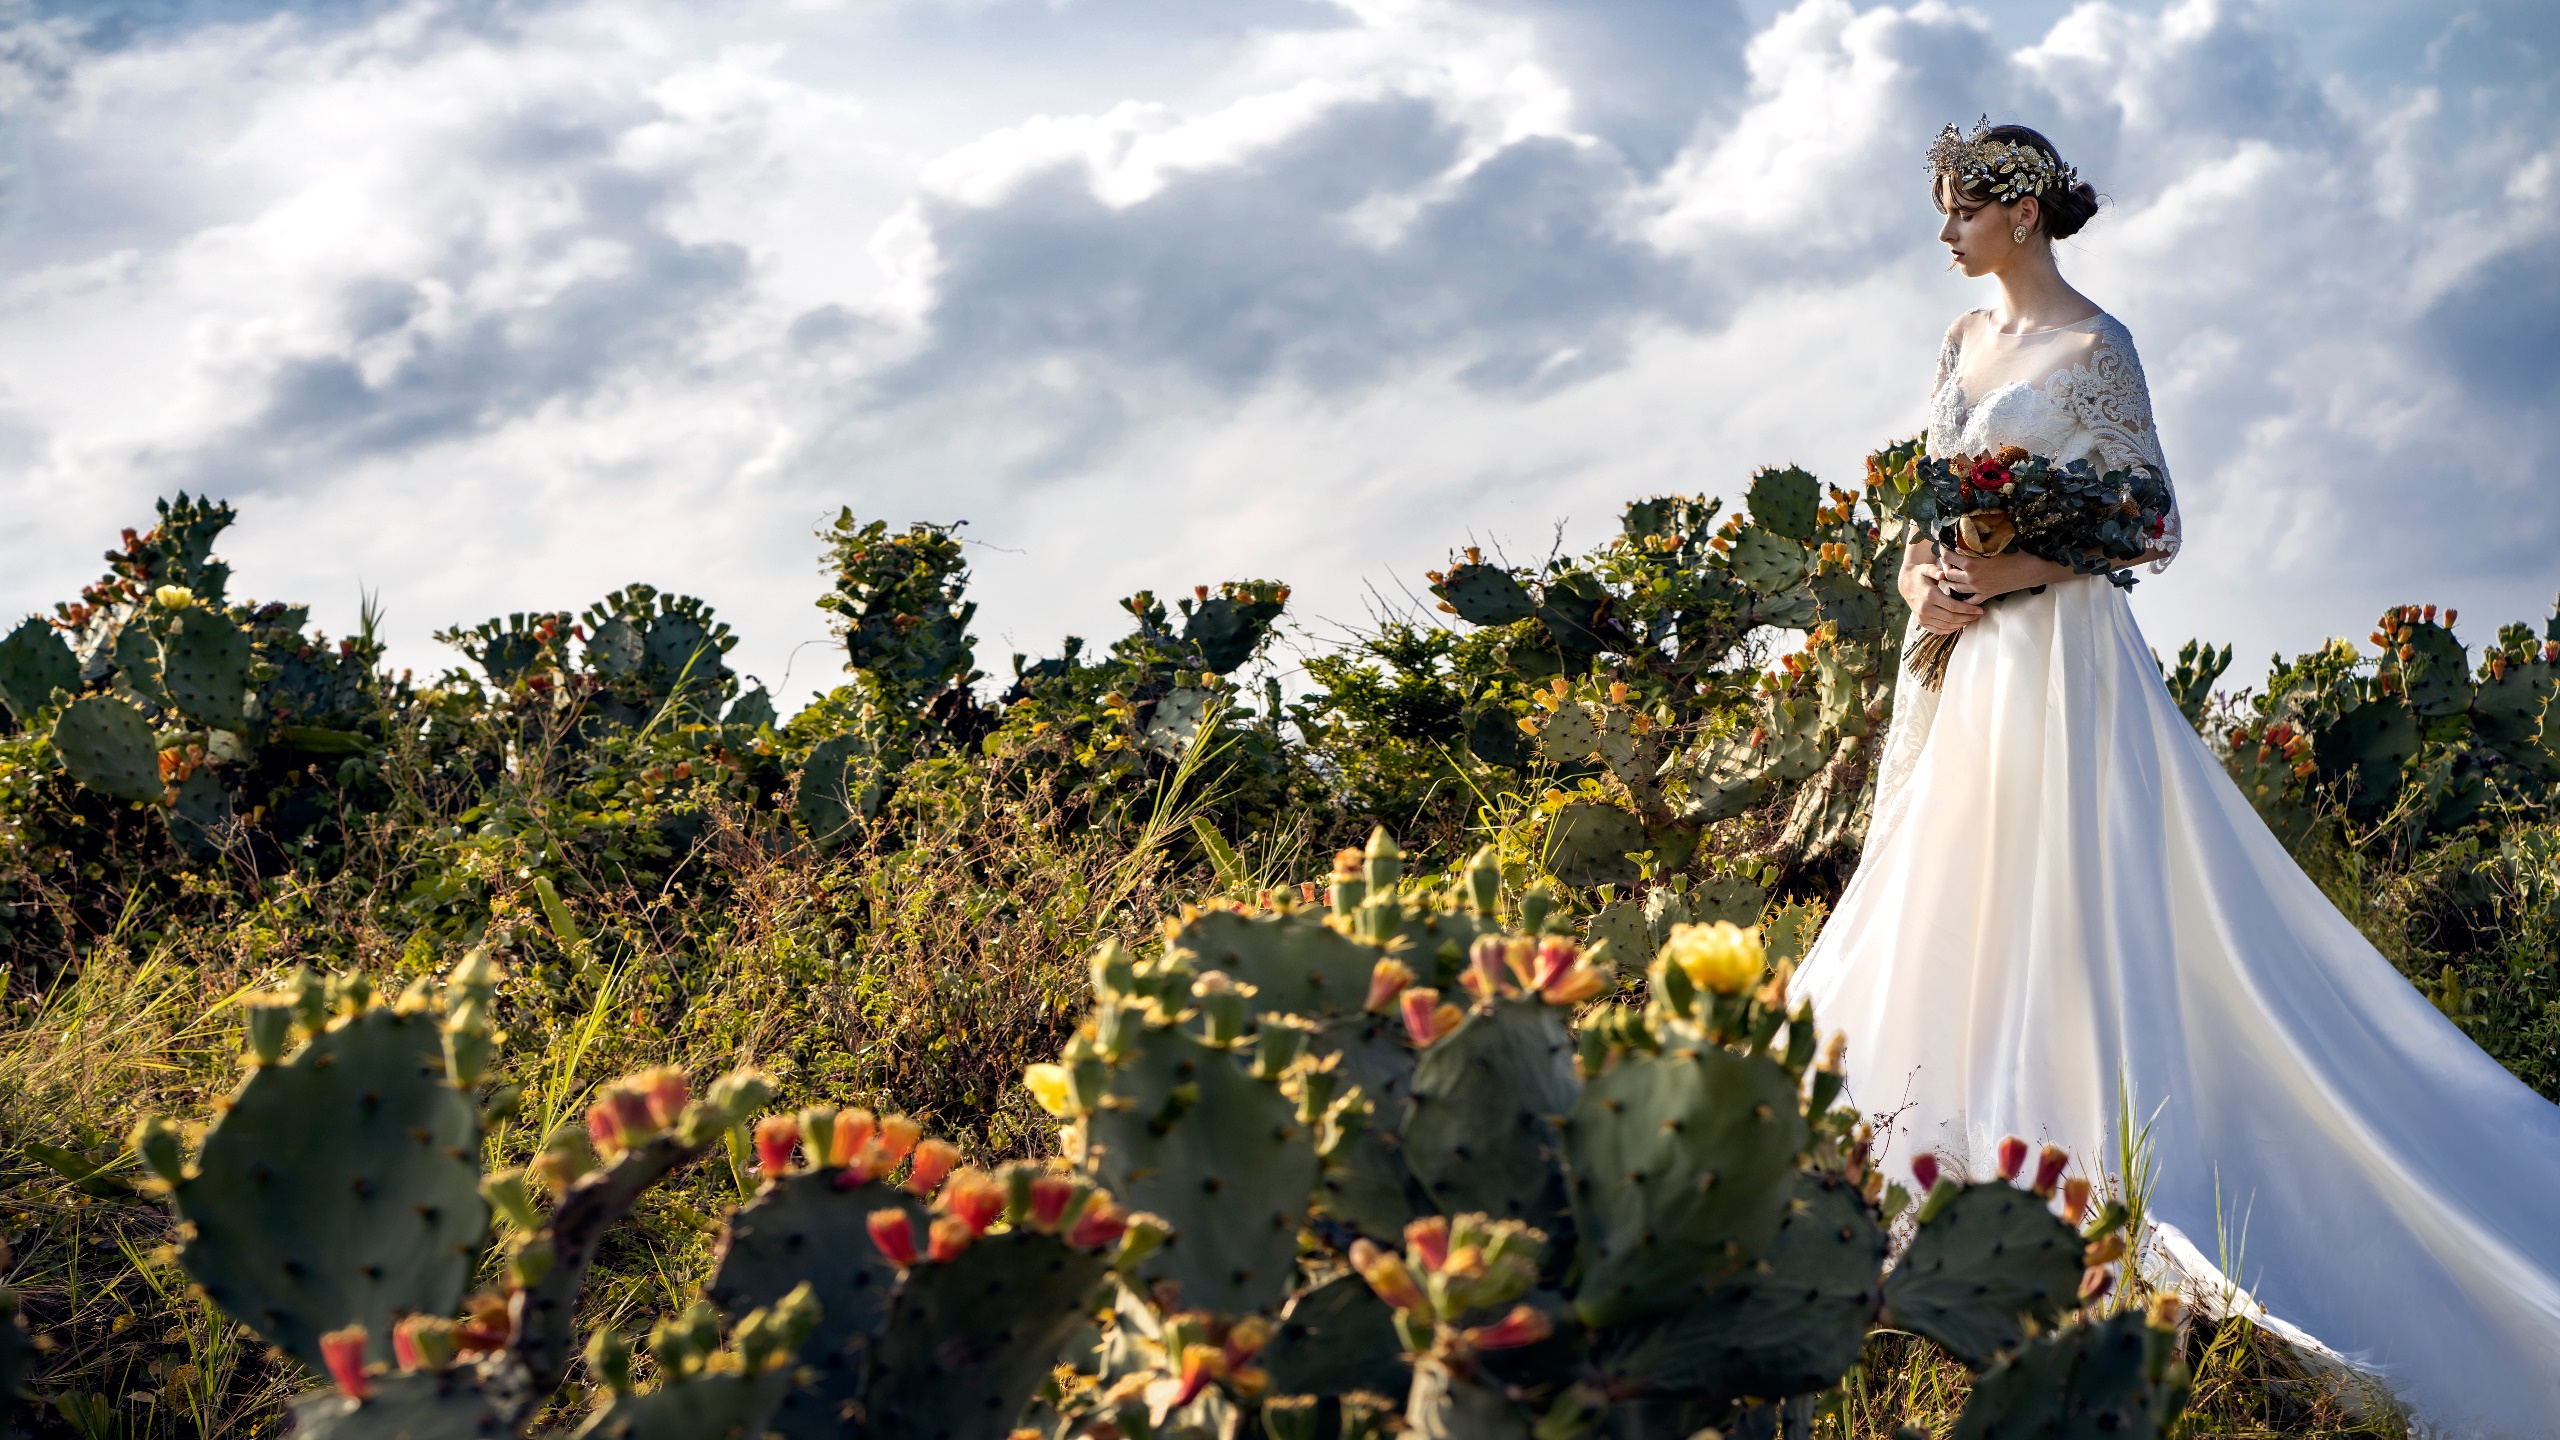 Plants Outdoors Women Outdoors Women Model Brunette White Dress Flowers Cactus Wedding Dress Hair Or 2560x1440